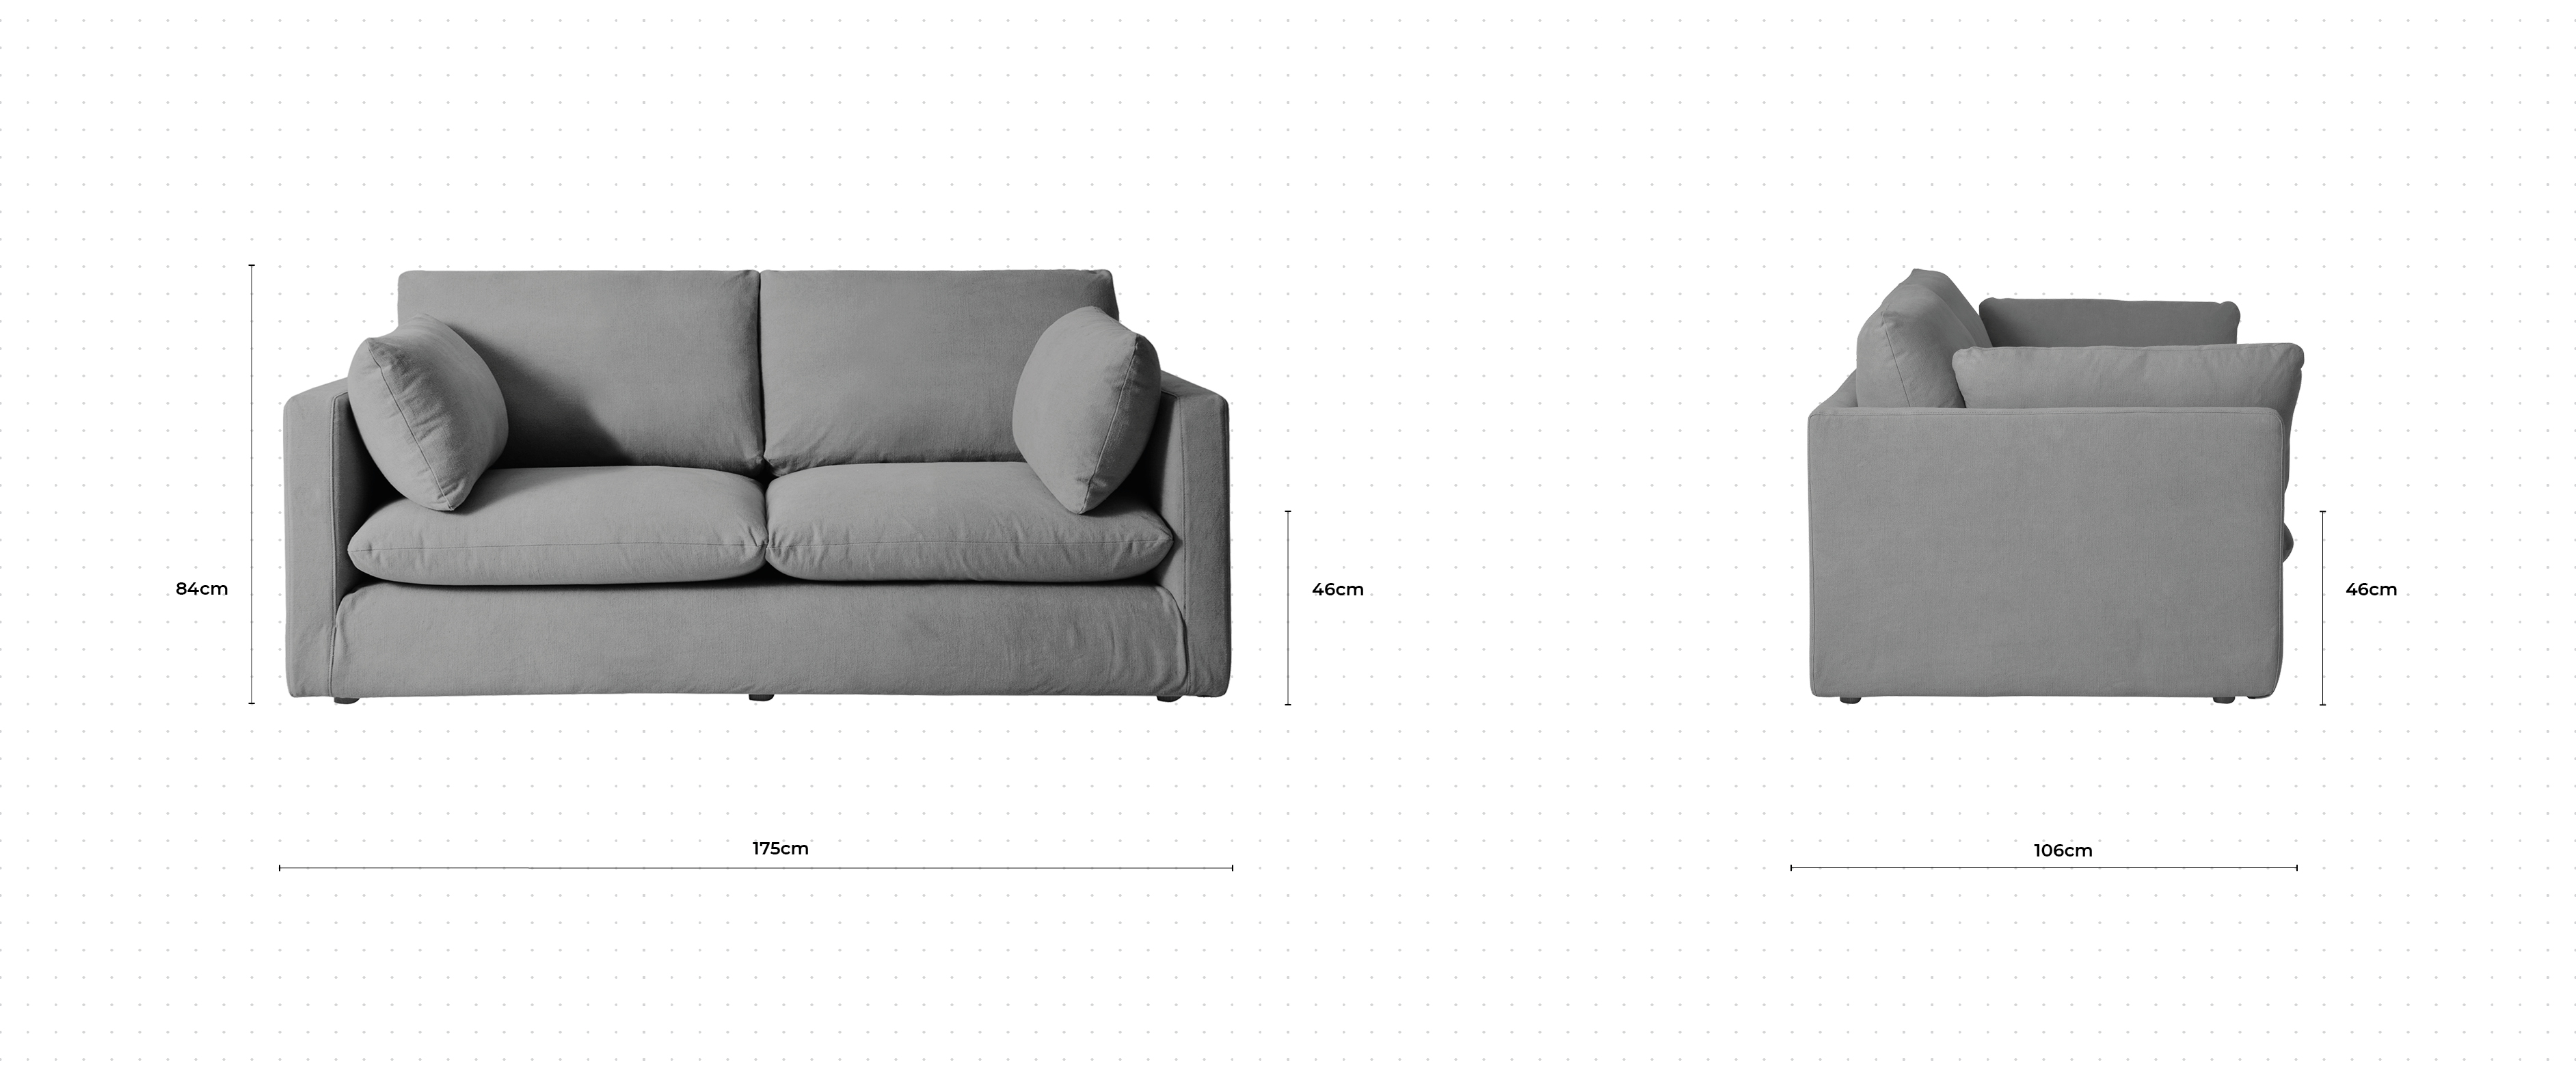 La Jola 2 Seater Sofa dimensions